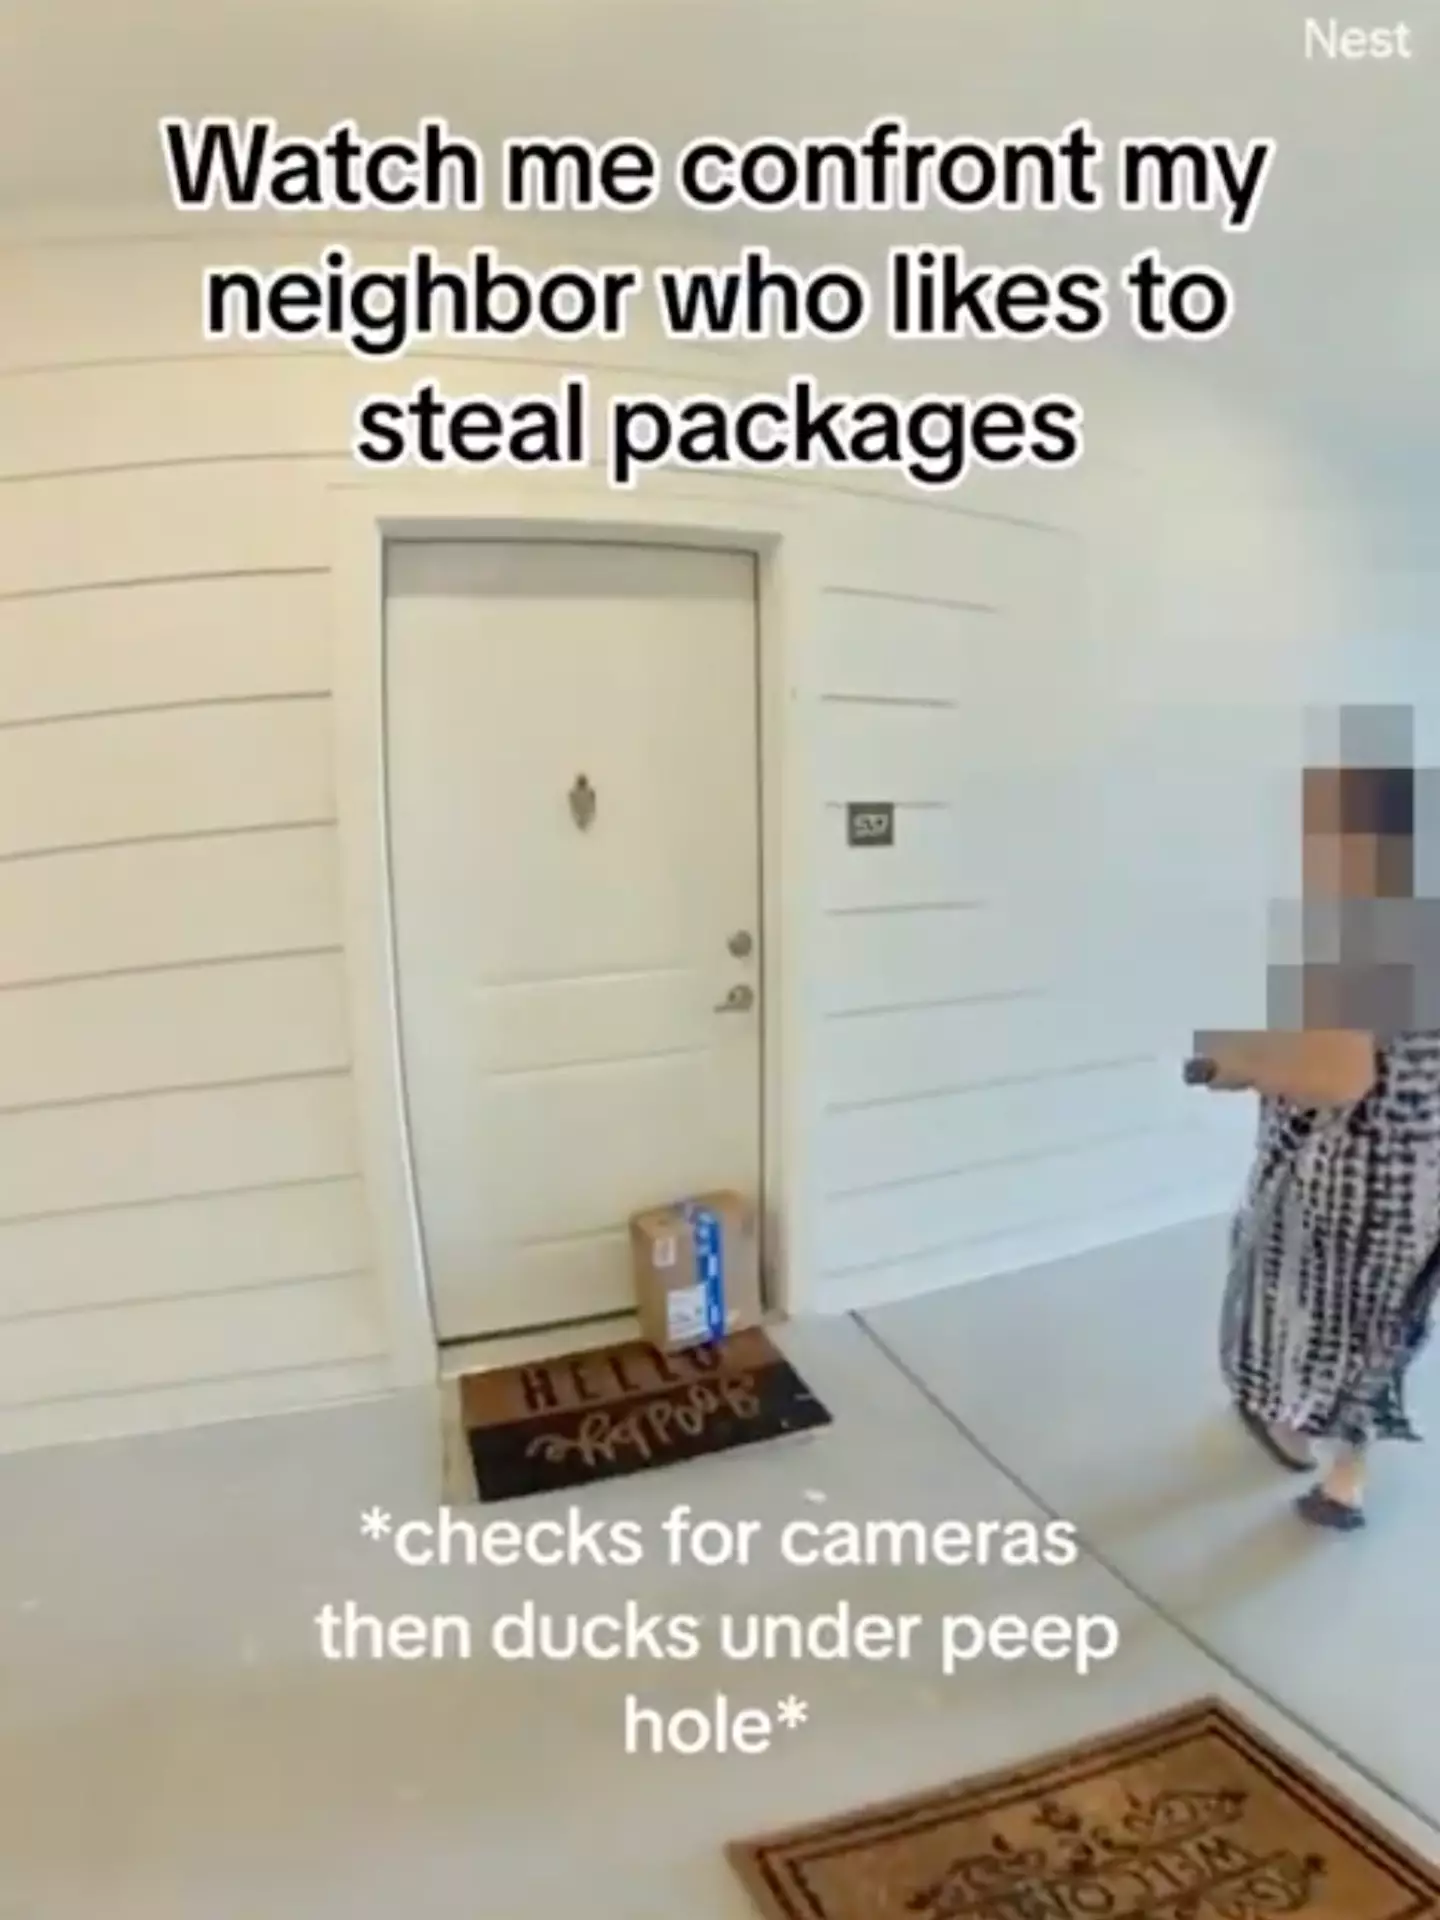 The TikToker's neighbor's doorbell camera captured the footage.